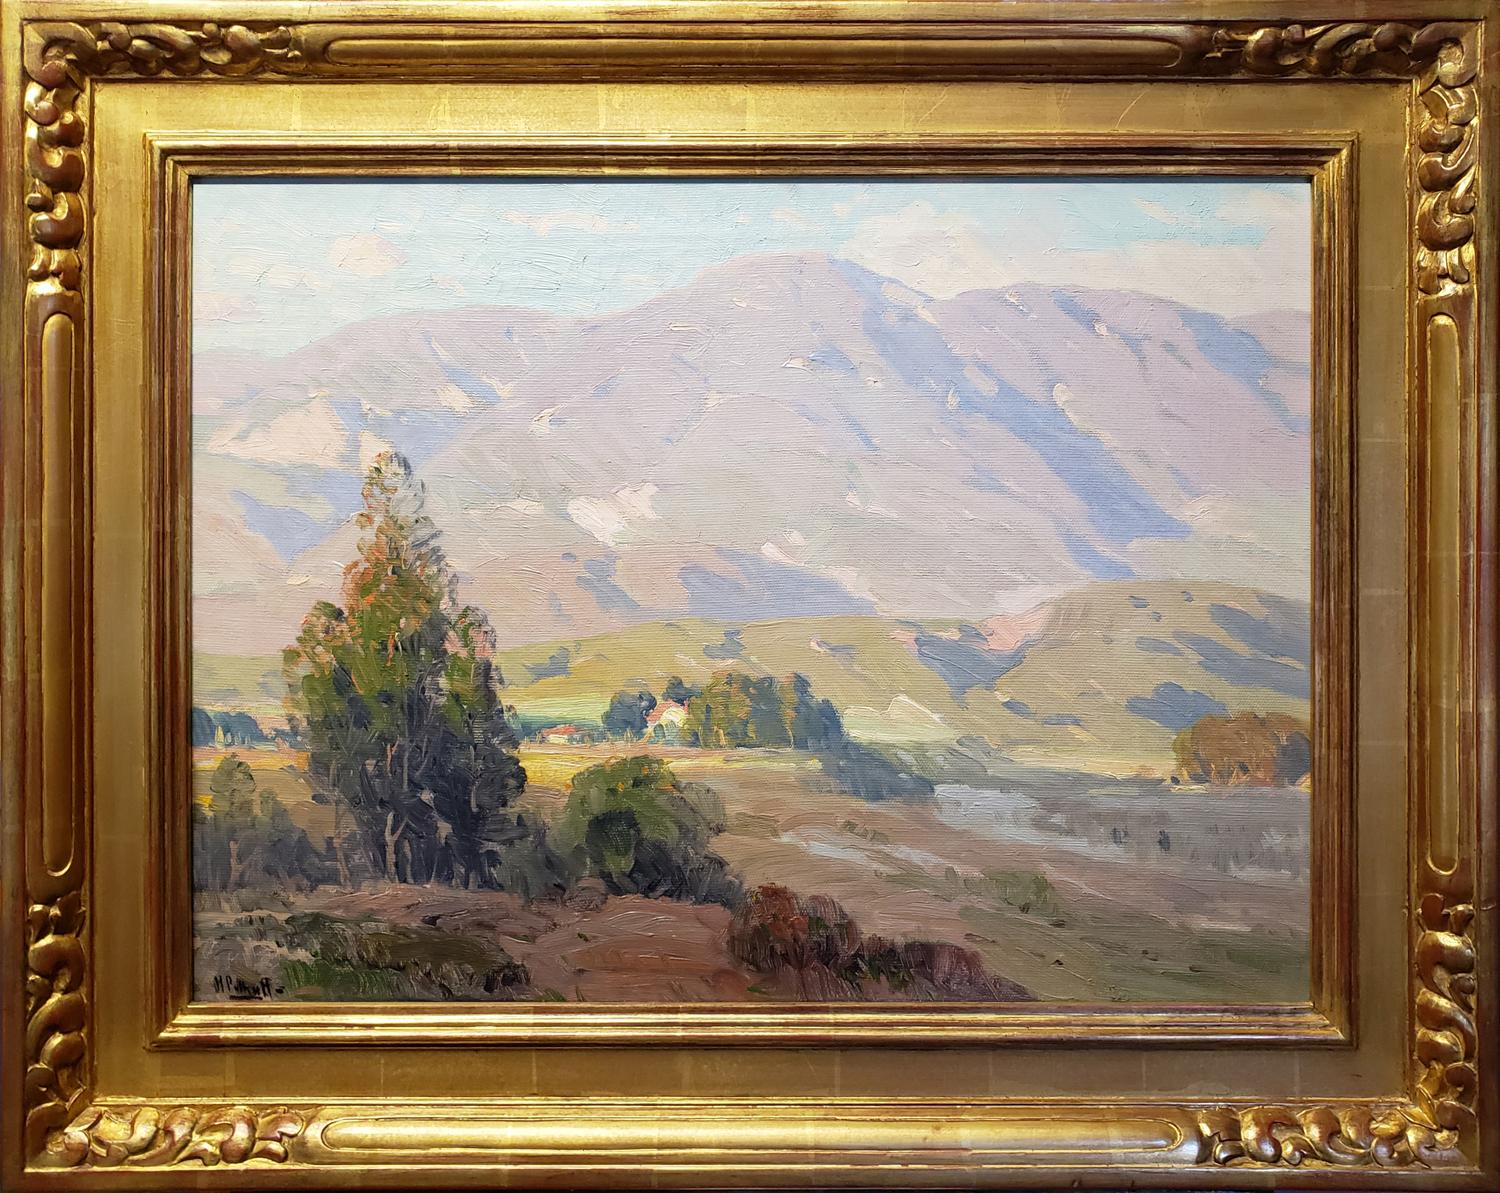 Near La Cañada, c. 1930 - Painting by Hanson Puthuff